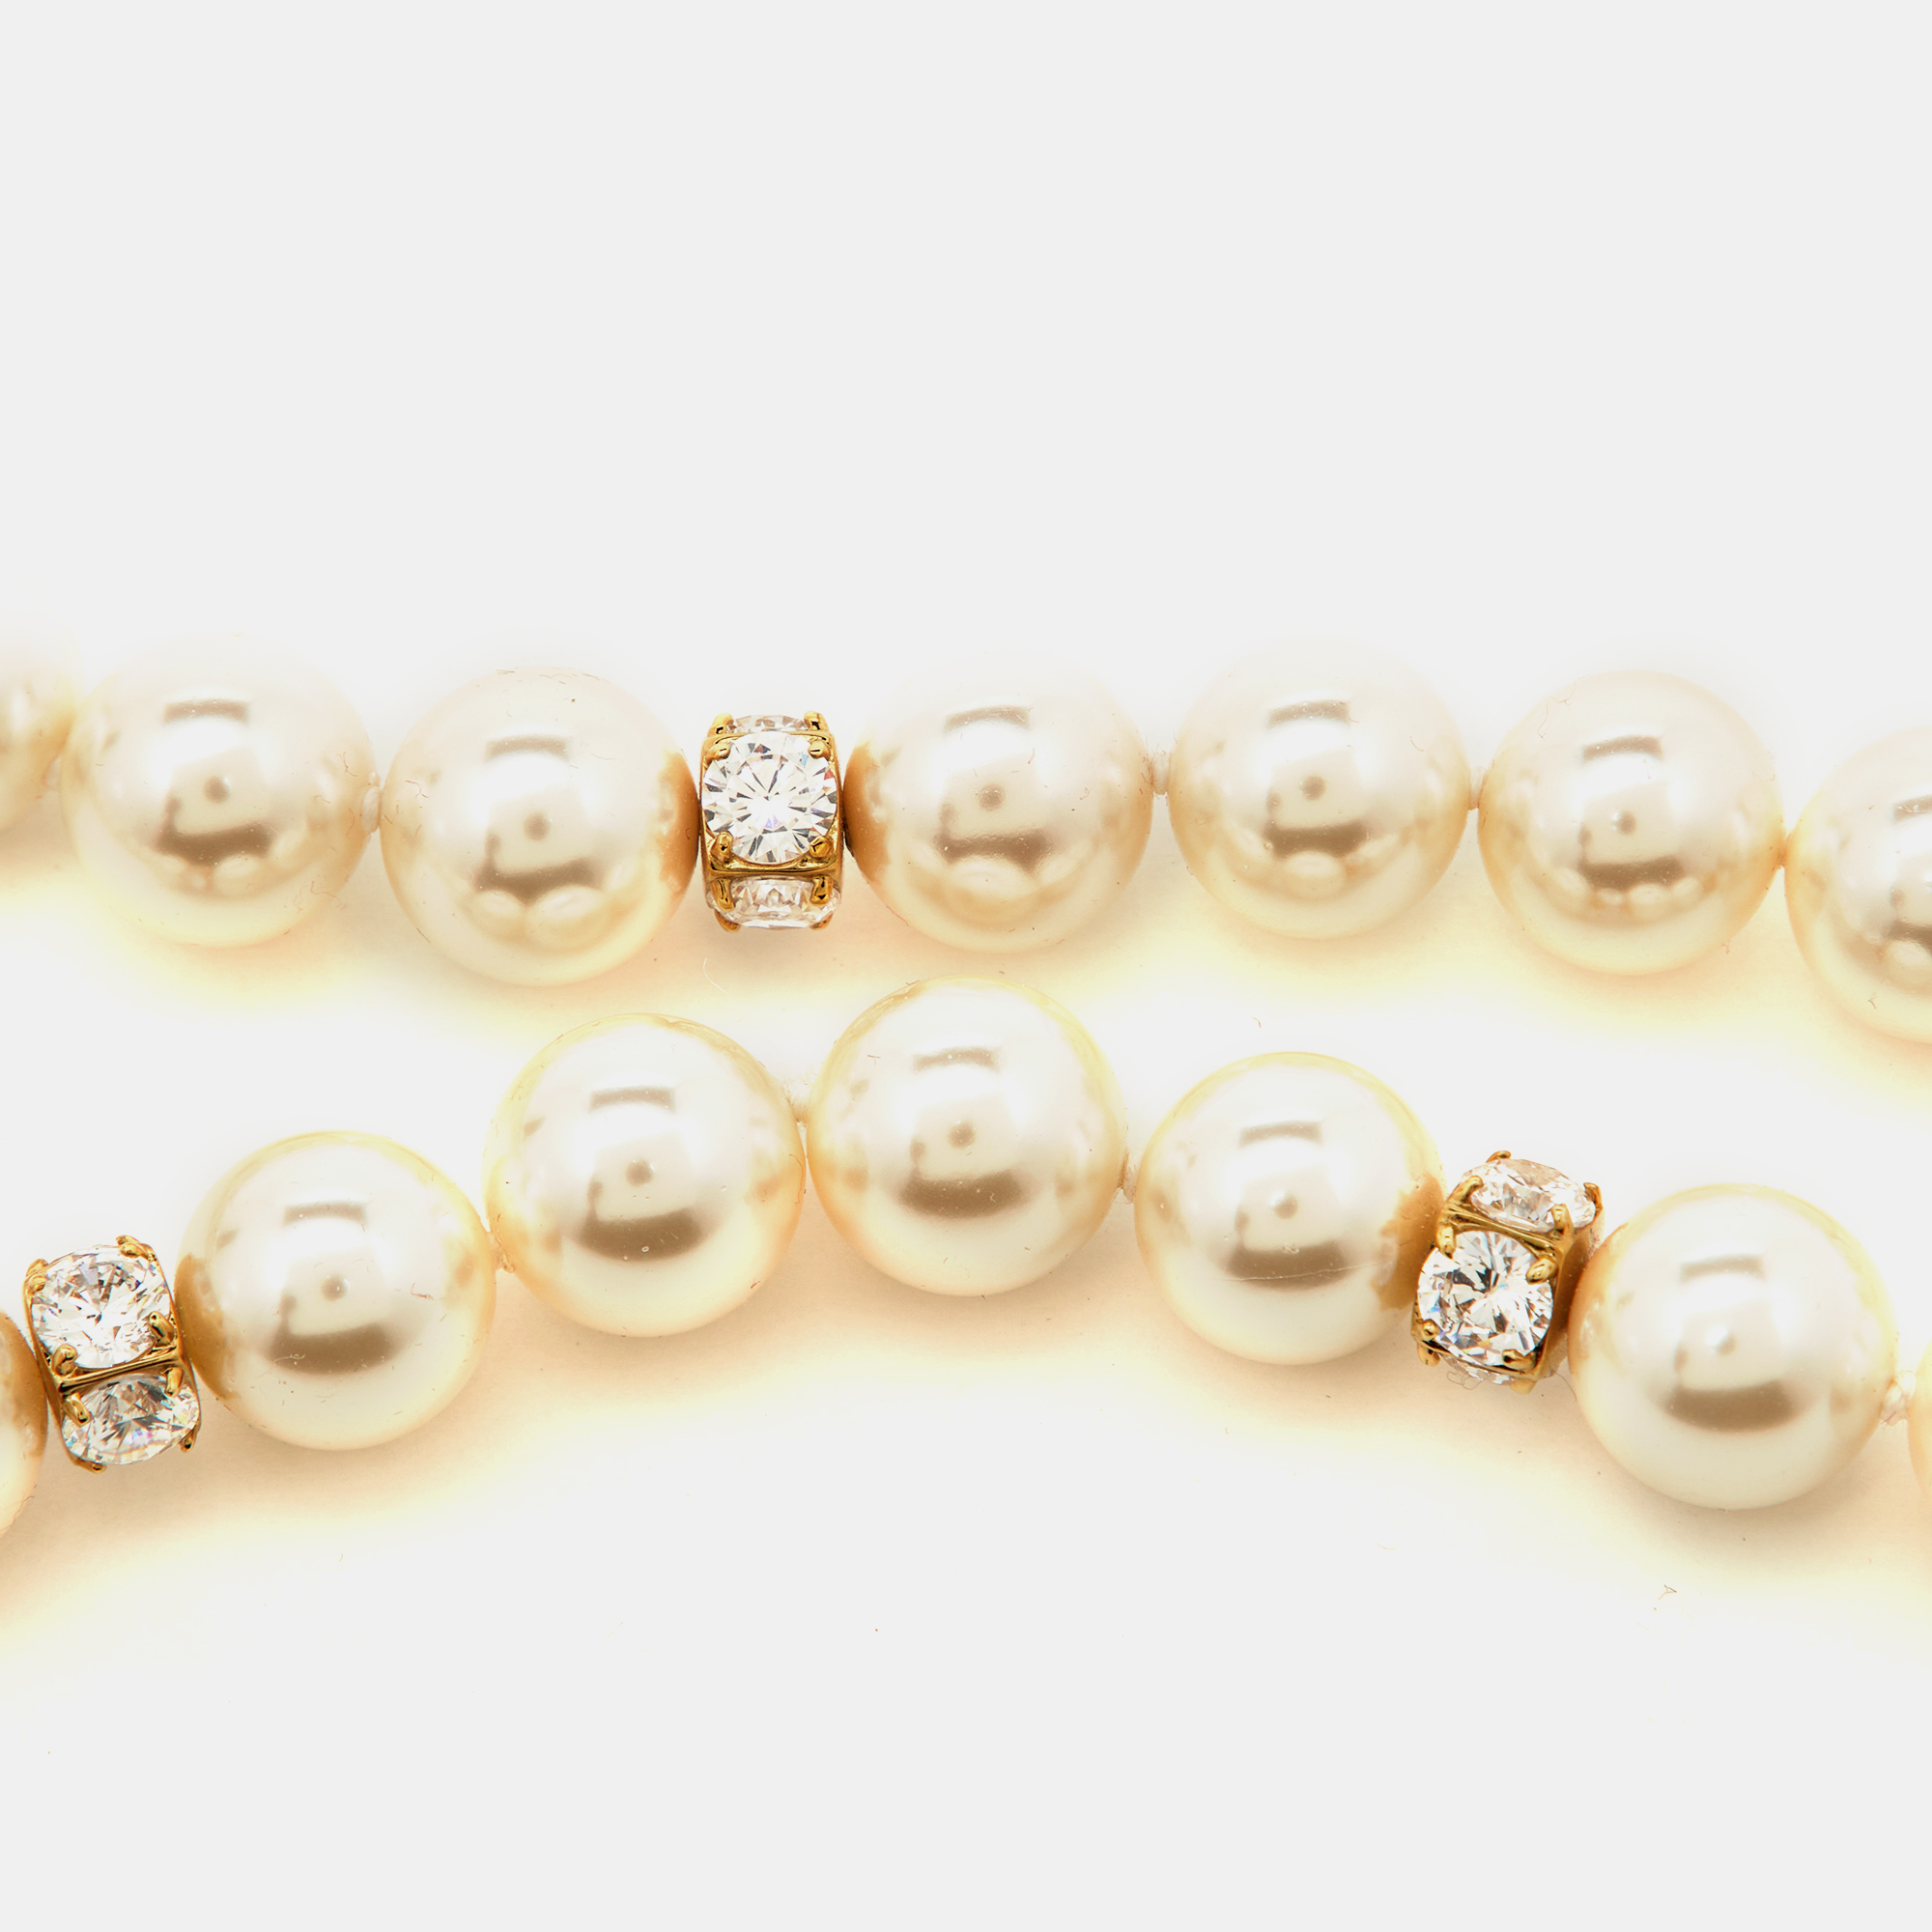 Carolina Herrera Crystal Faux Pearl Beaded Magnetic Necklace